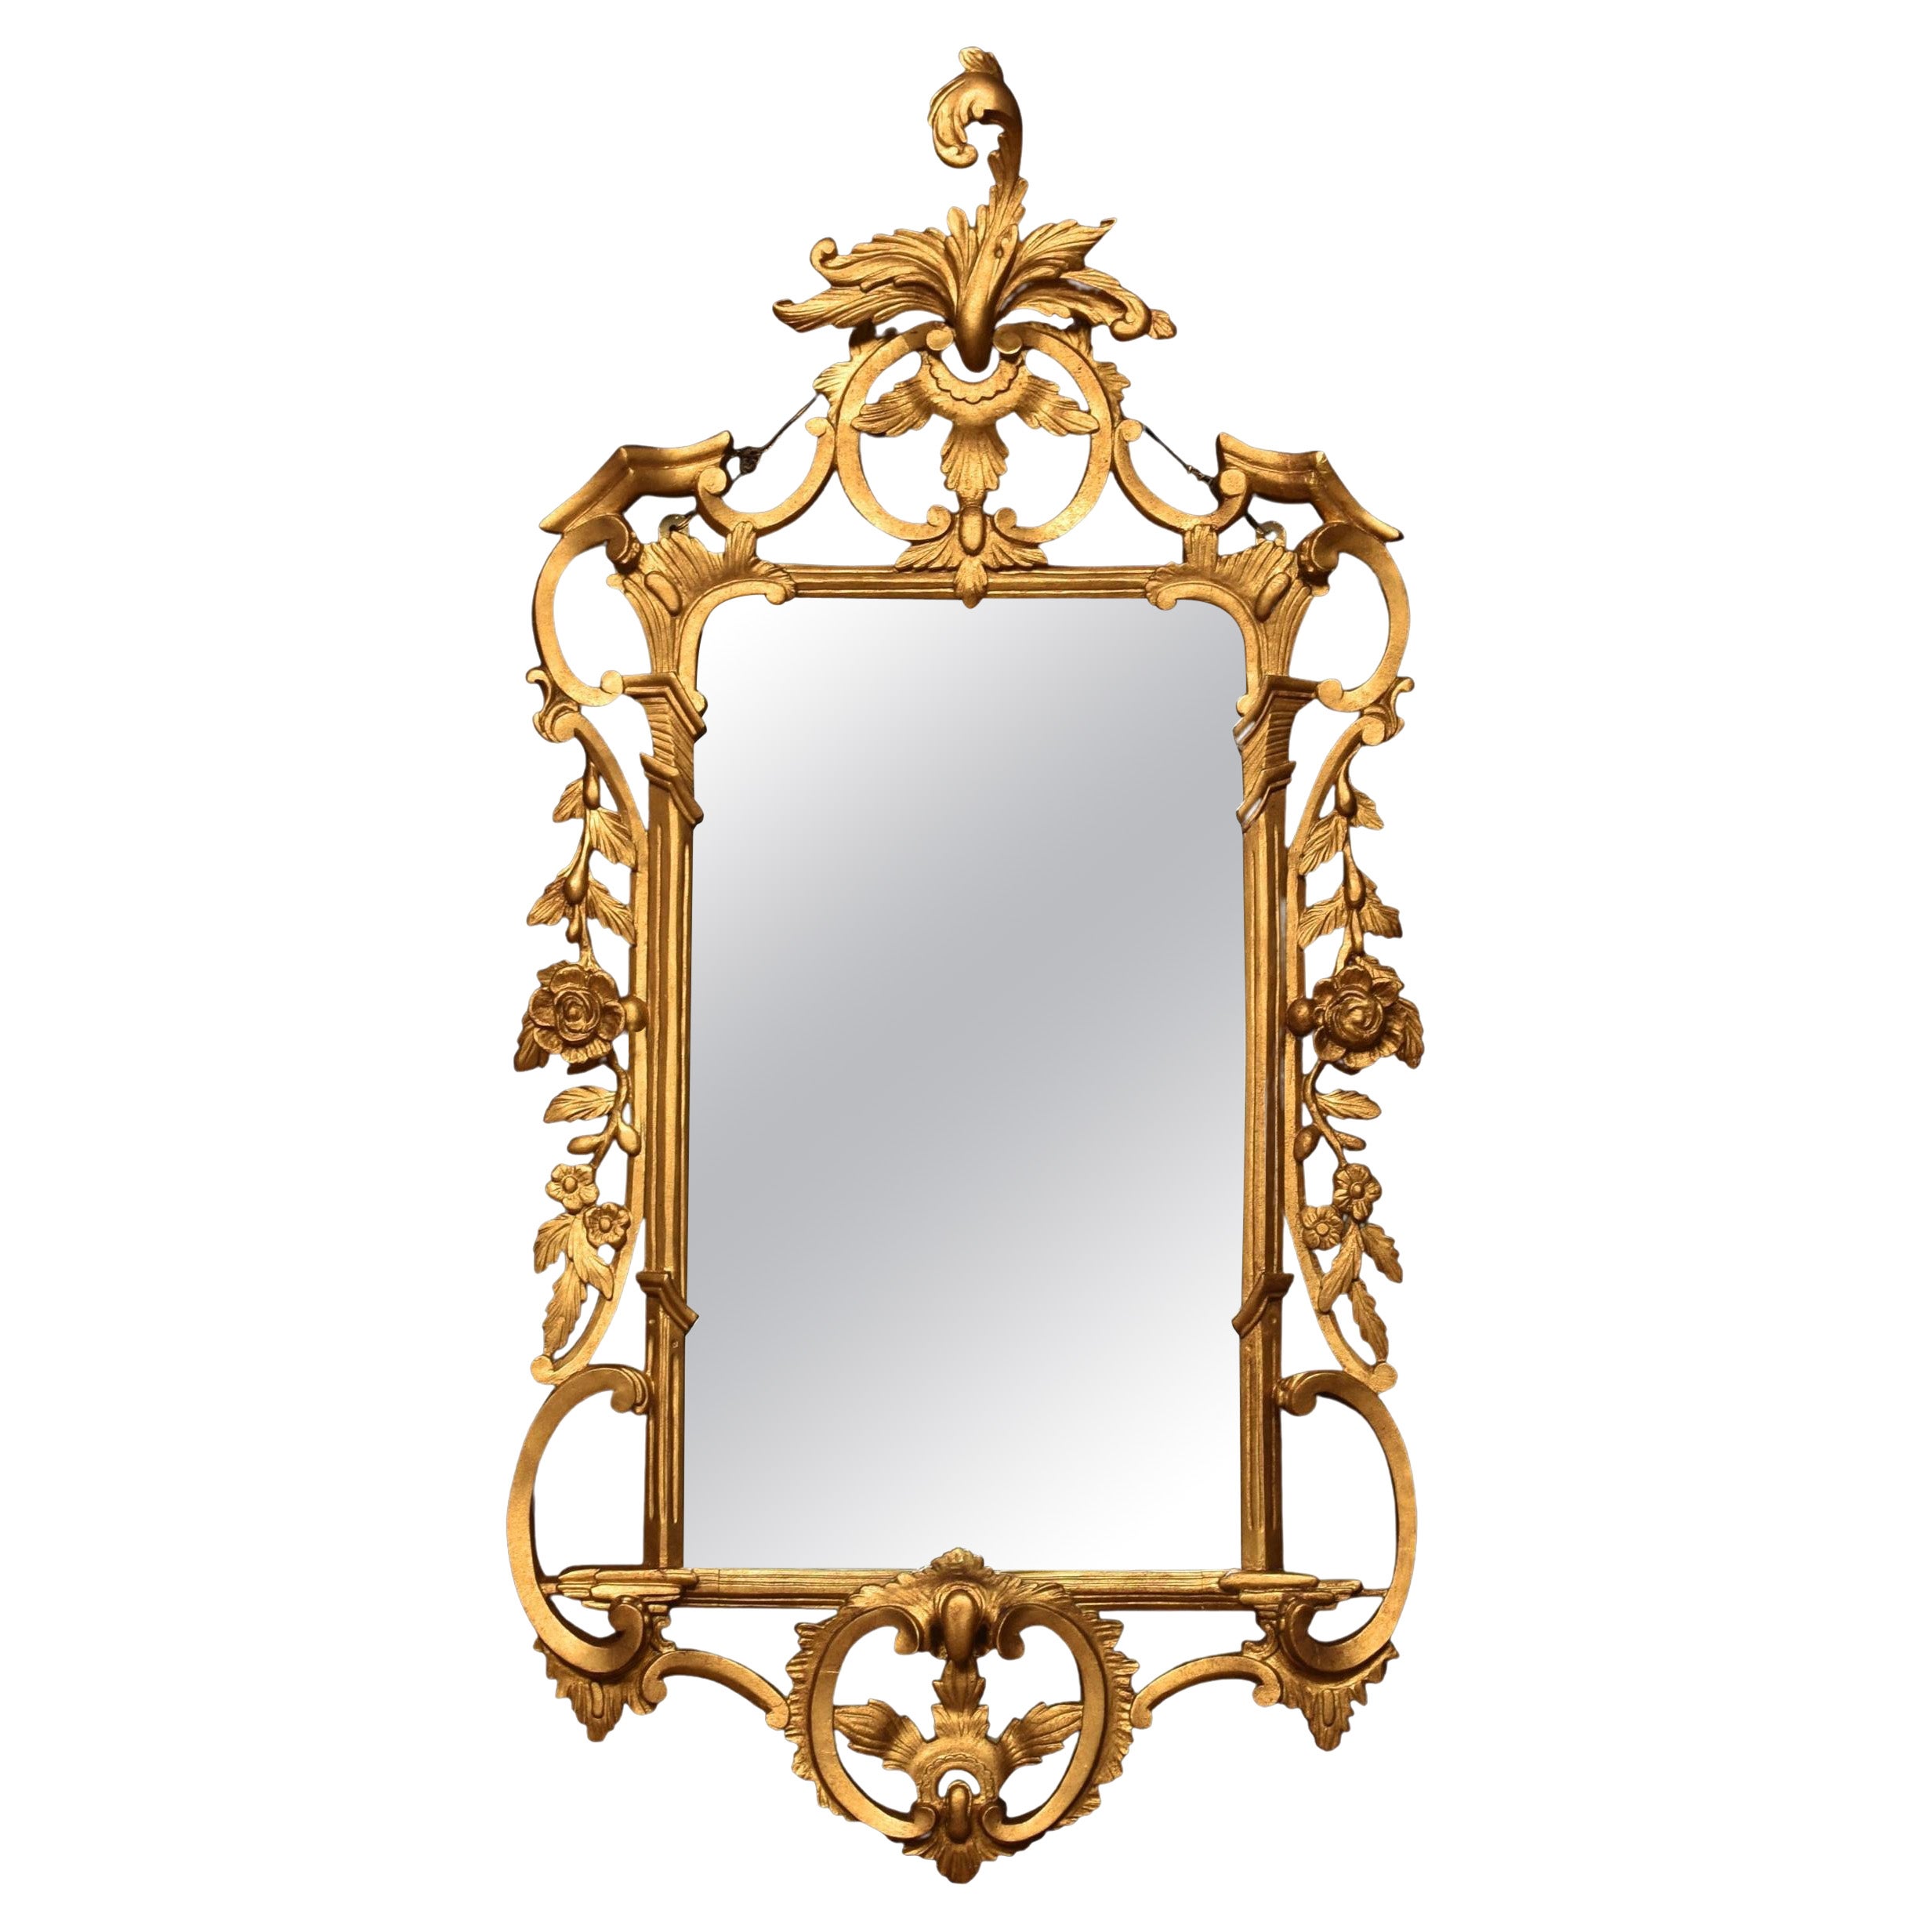 Miroir en bois doré de style baroque